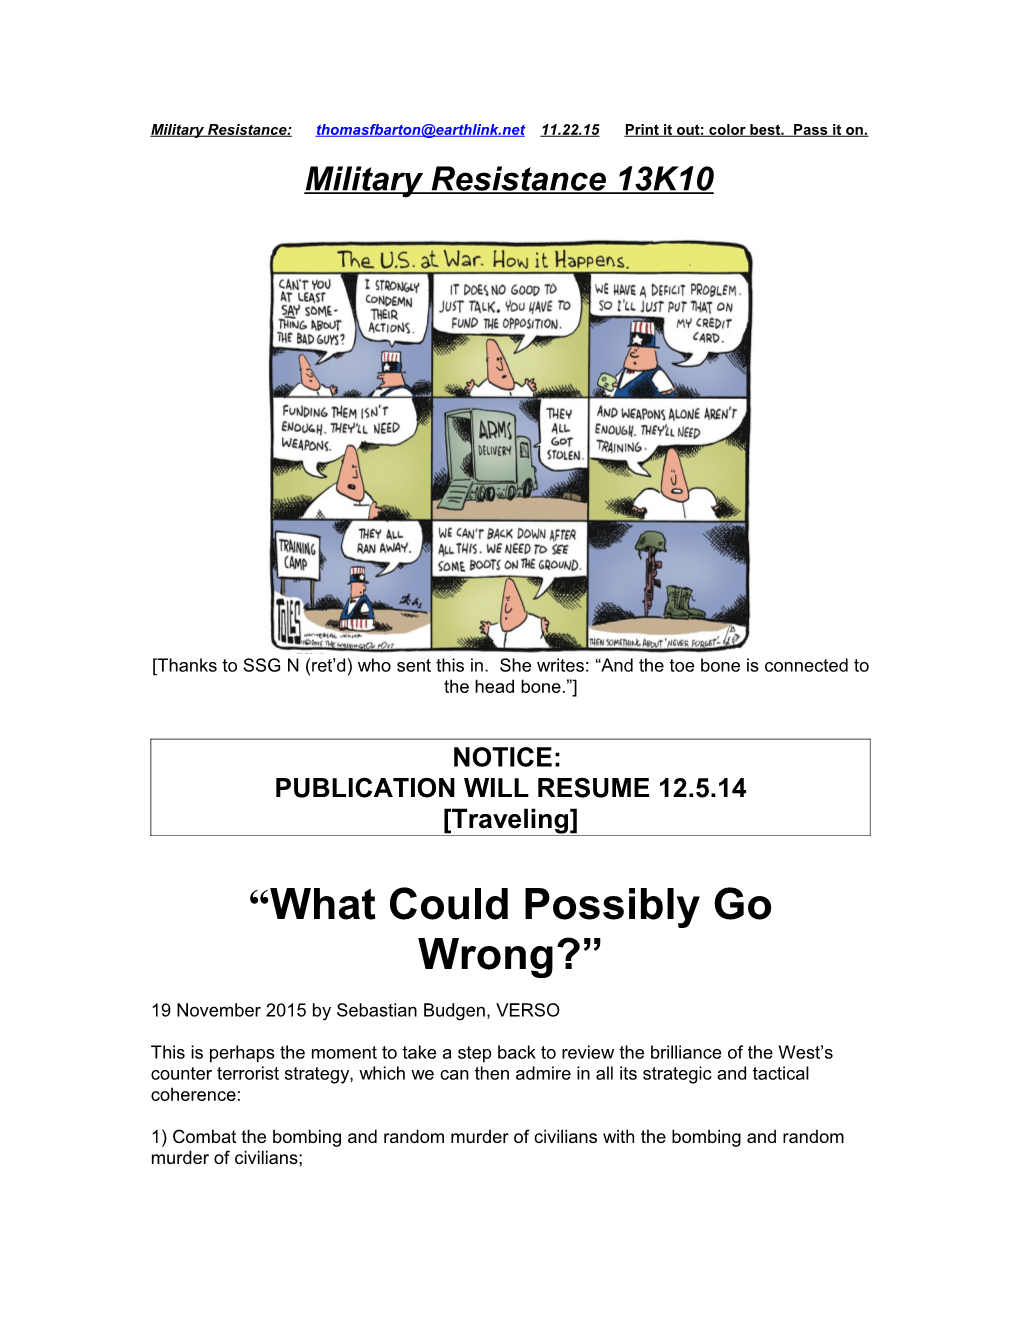 Military Resistance 13K10